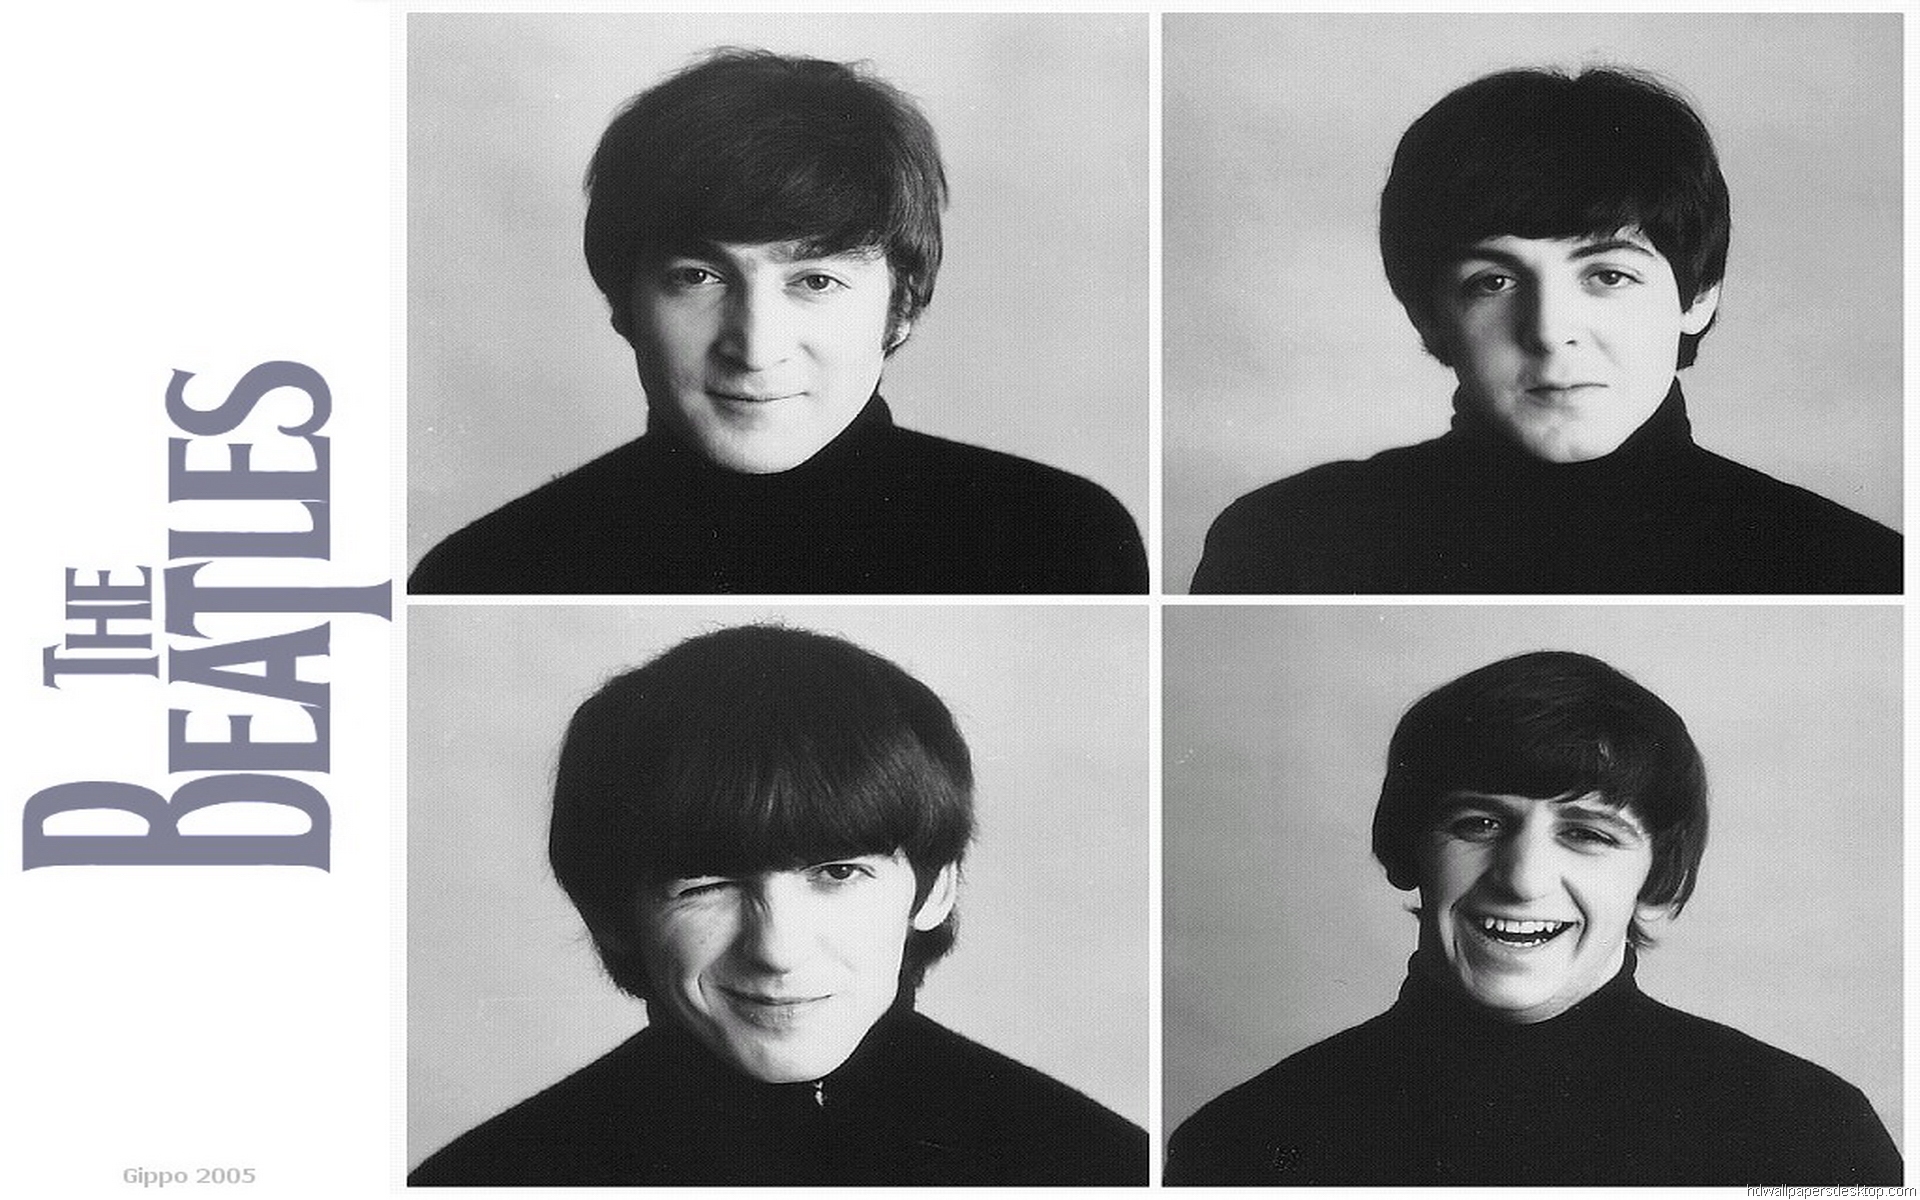 The Beatles Wallpaper Widescreen Wallpapers Backgrounds 1920x1200